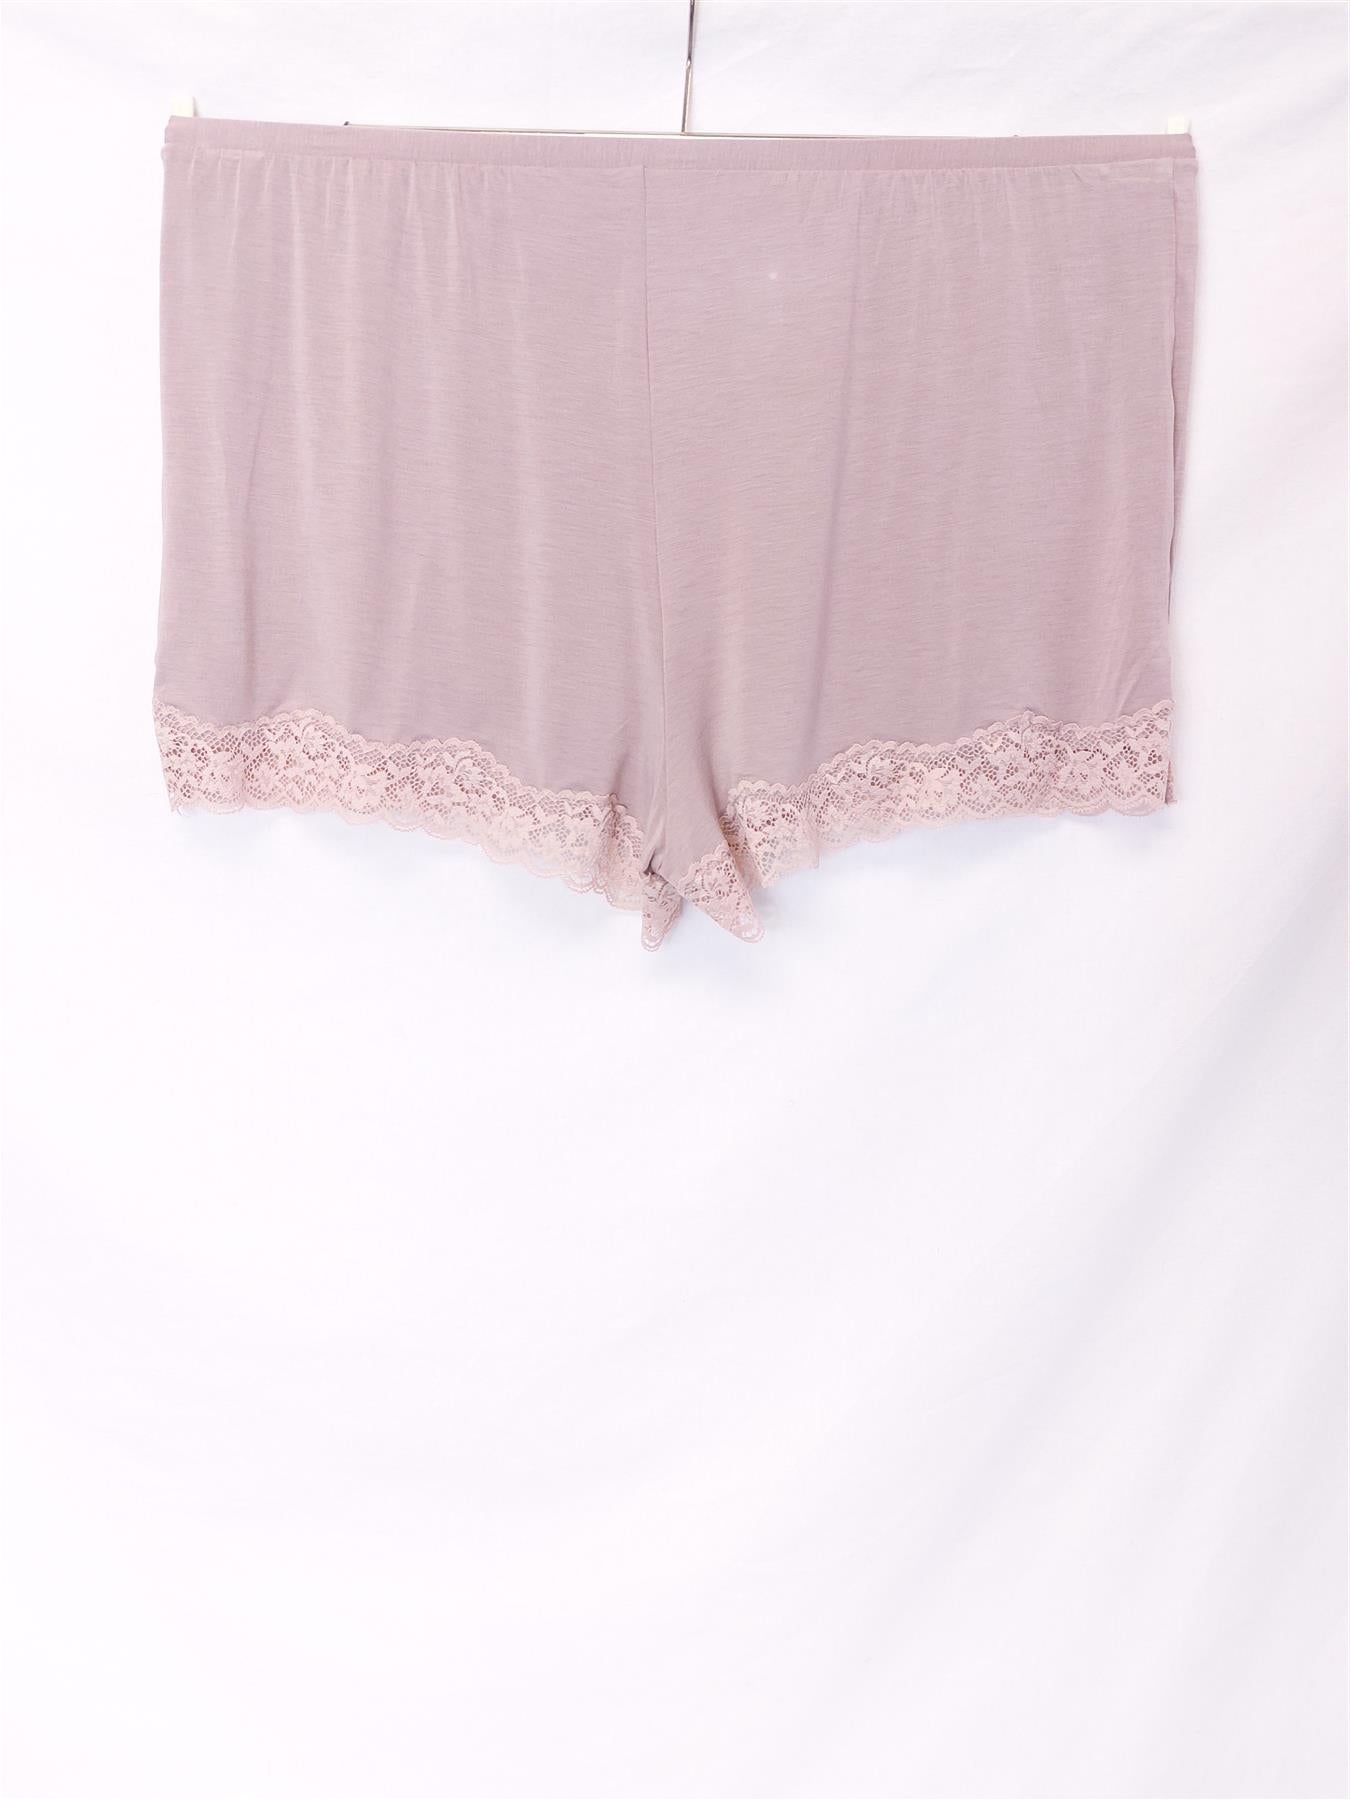 Women's Pyjama Bottoms Shorts Loungewear Soft Comfy Stretch Lace Trim Mauve